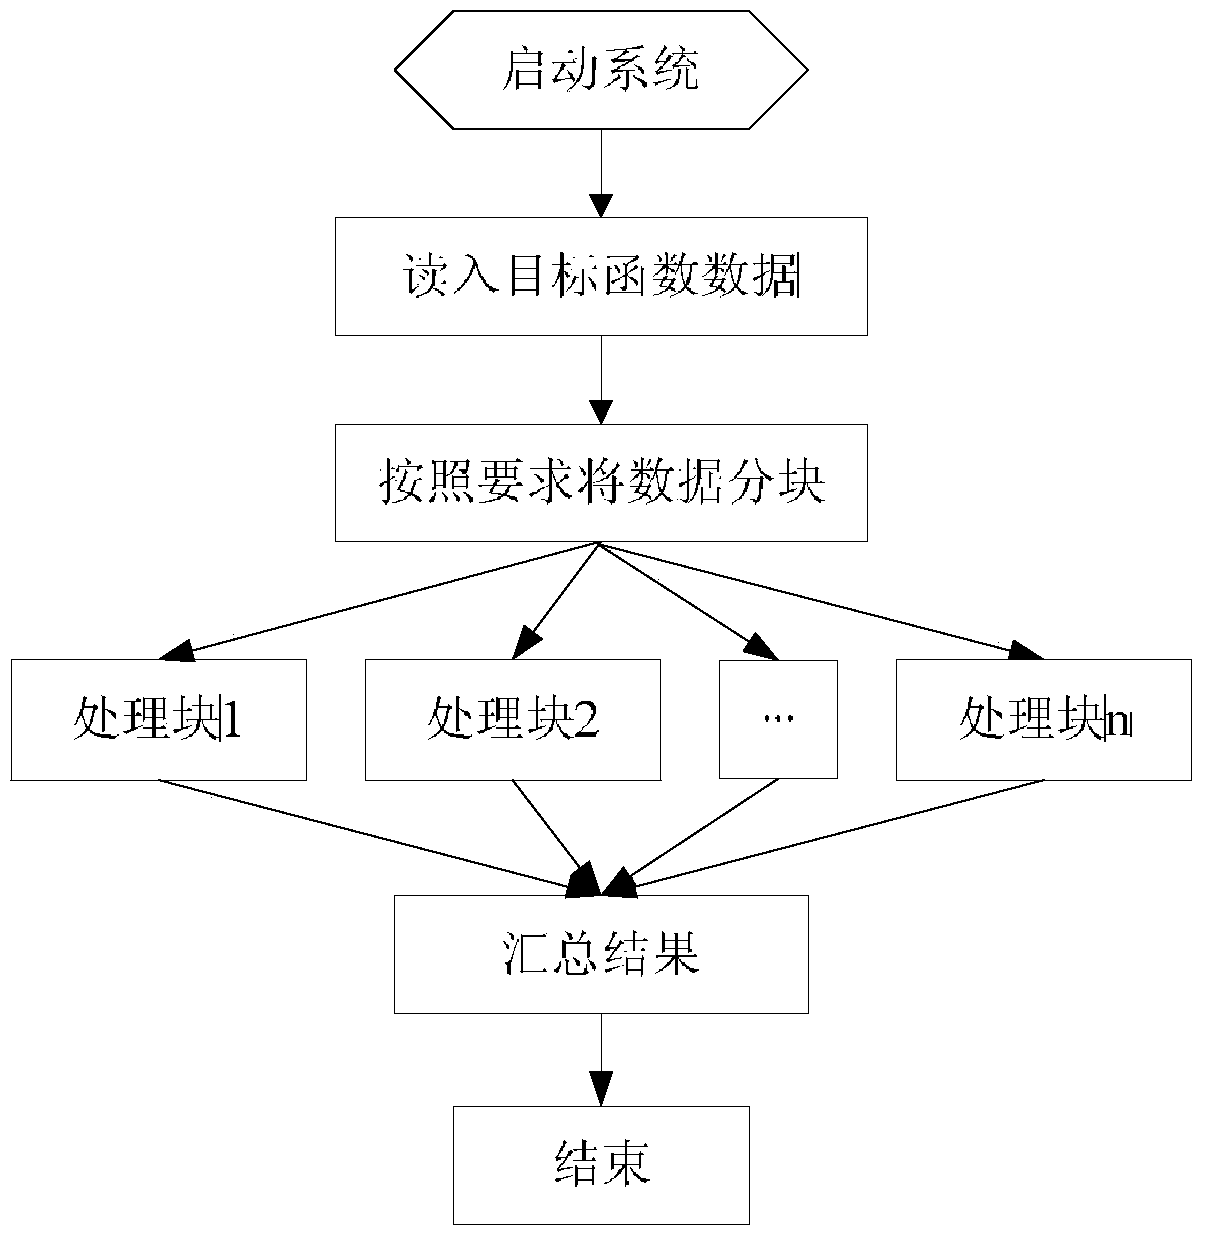 A data processing method based on admm algorithm